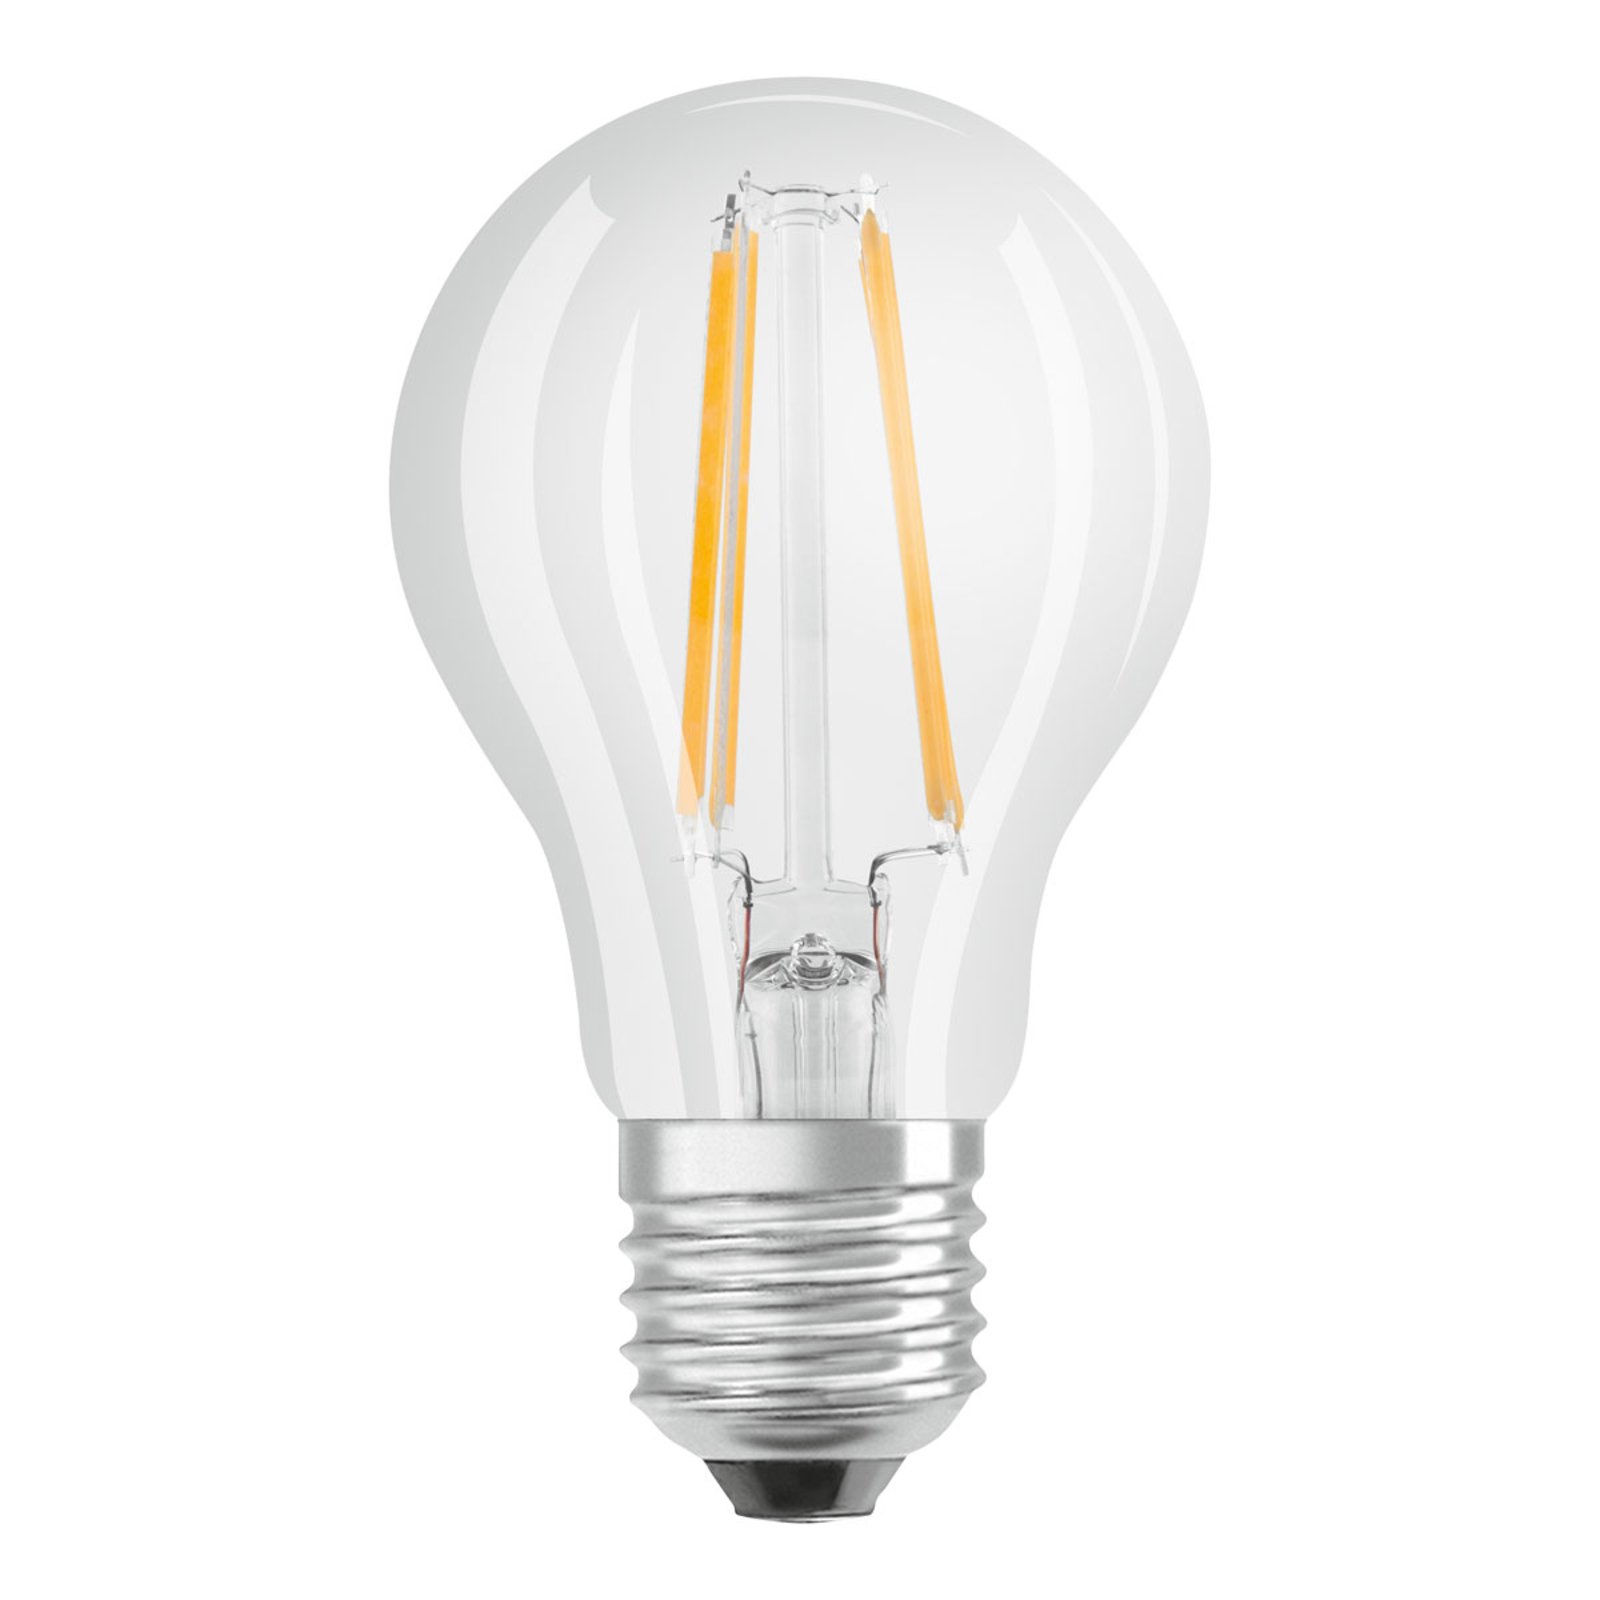 OSRAM LED-Lampe E27 Classic Filament 827 6,5W5er